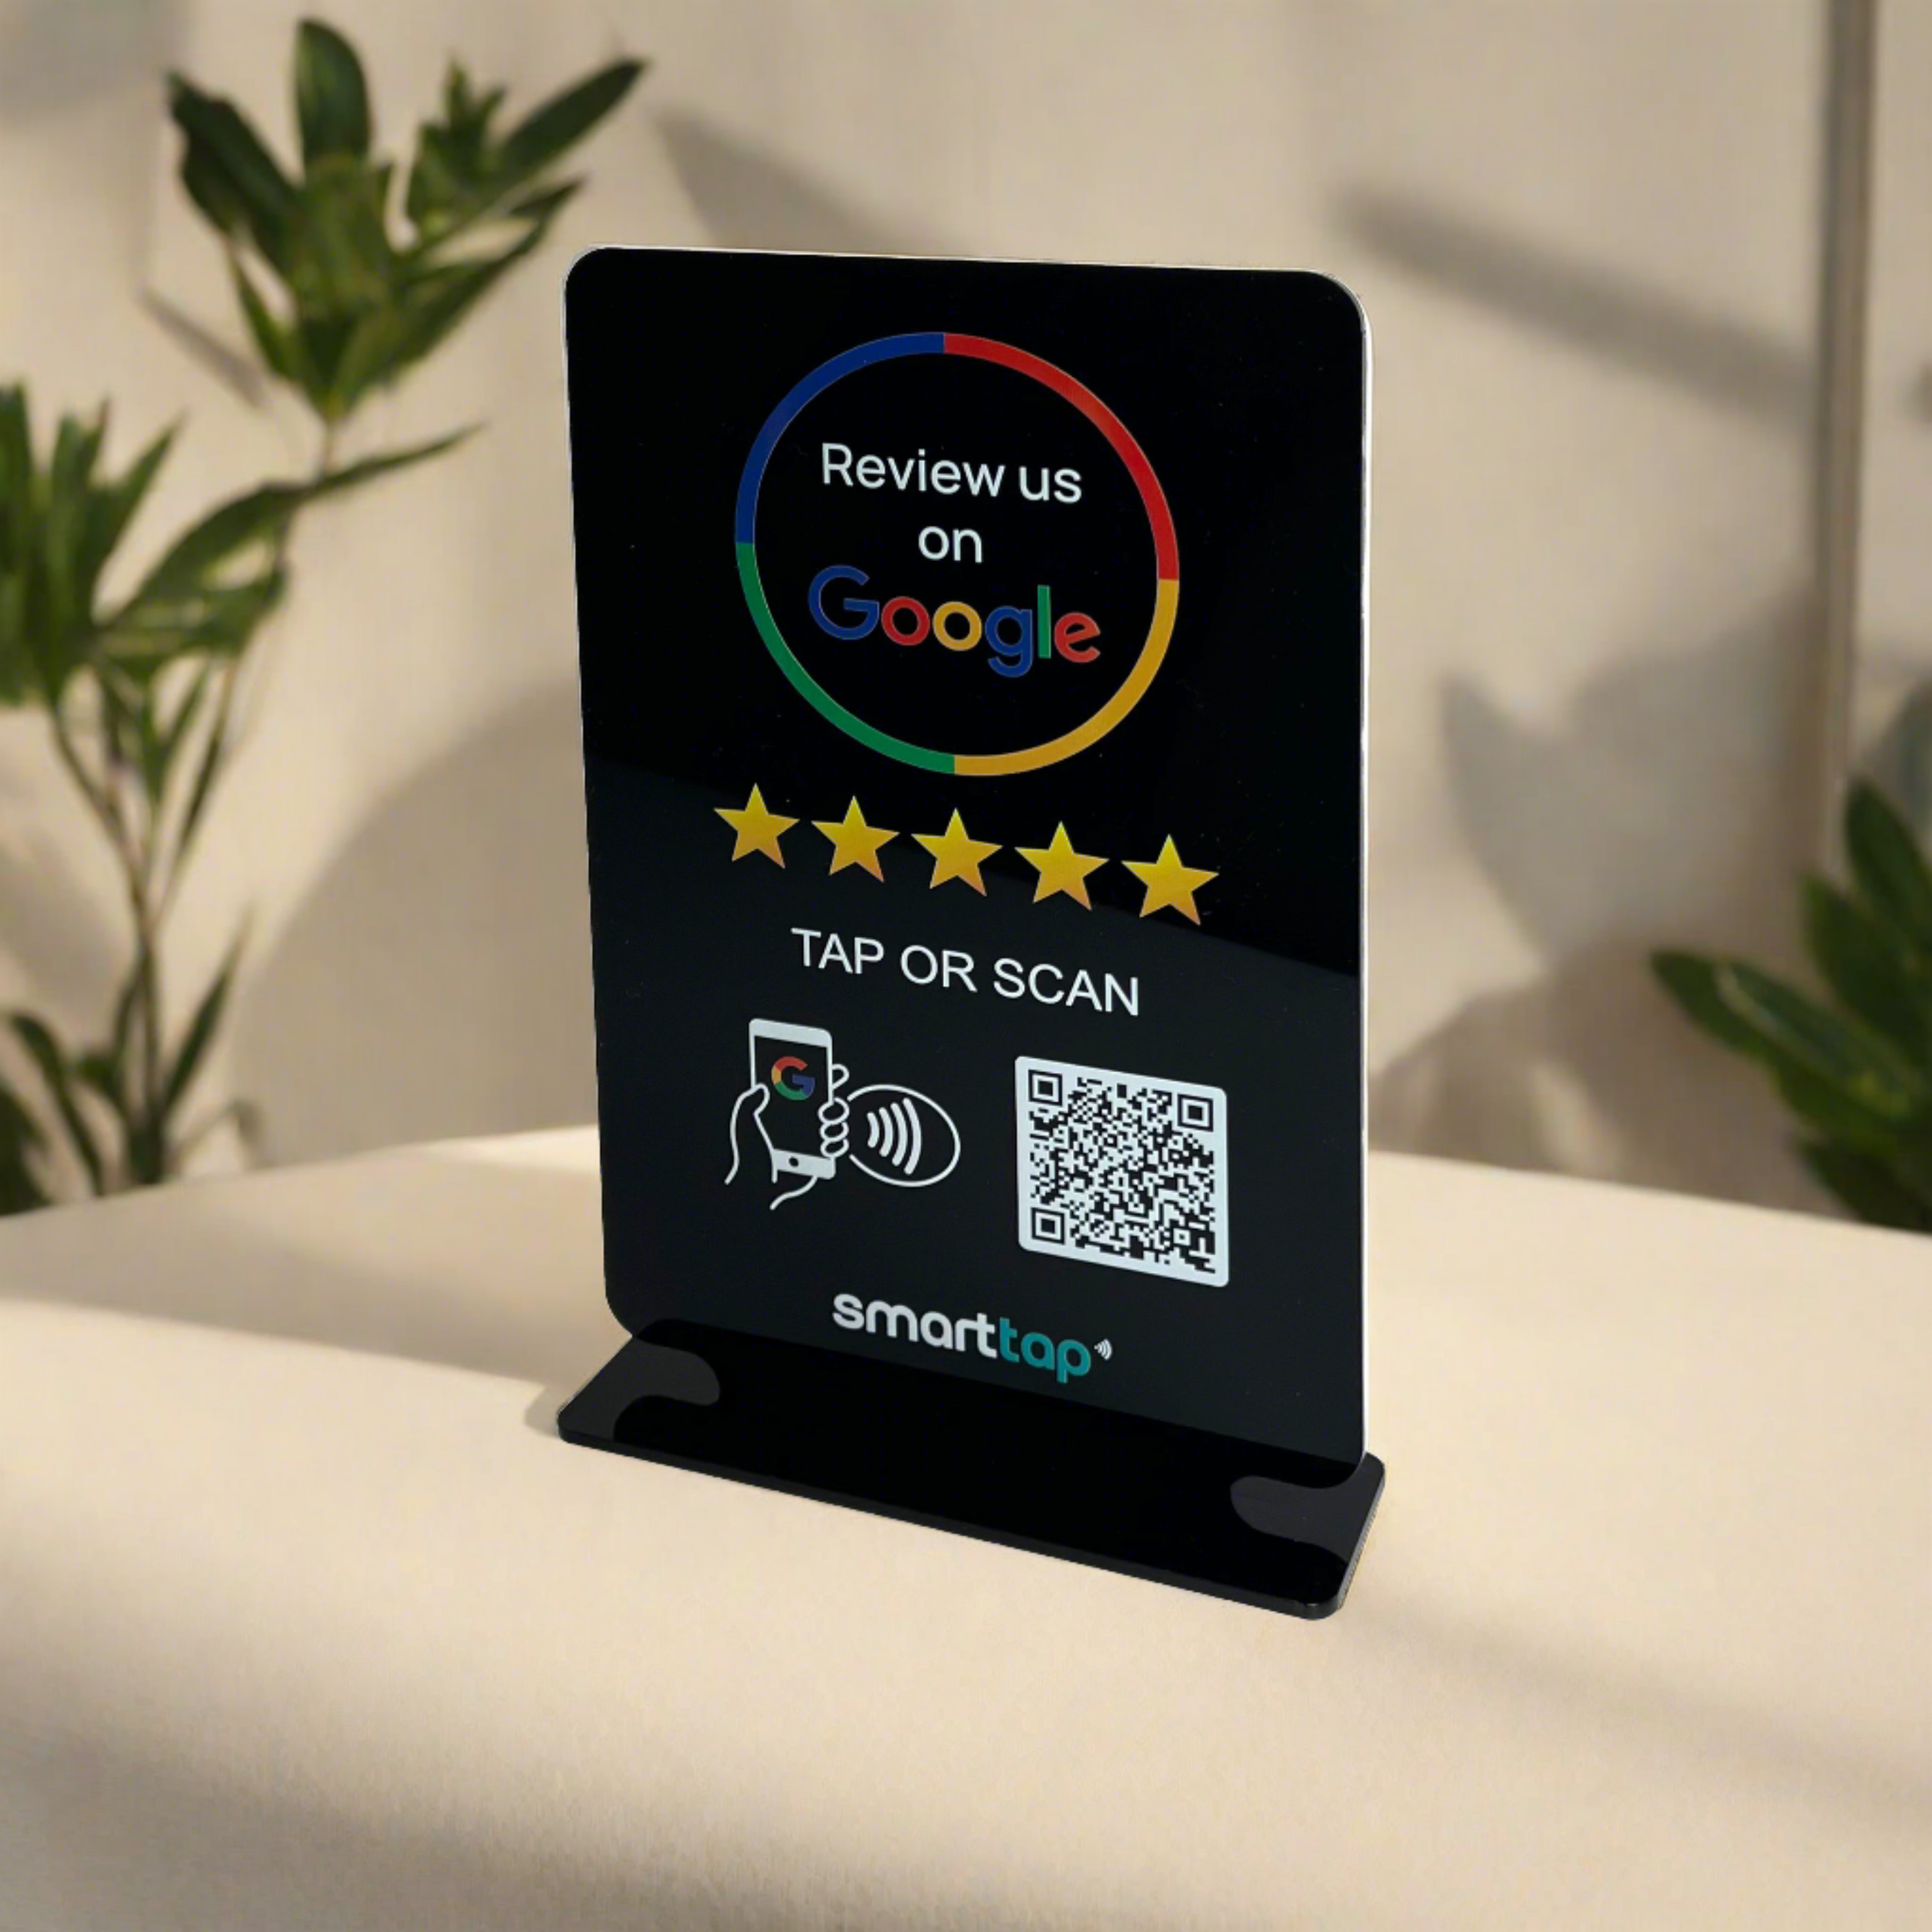 Smart-Tap, Google Review Table Talker T-Shape χωρίς λογότυπο. Μεγάλο μαύρο